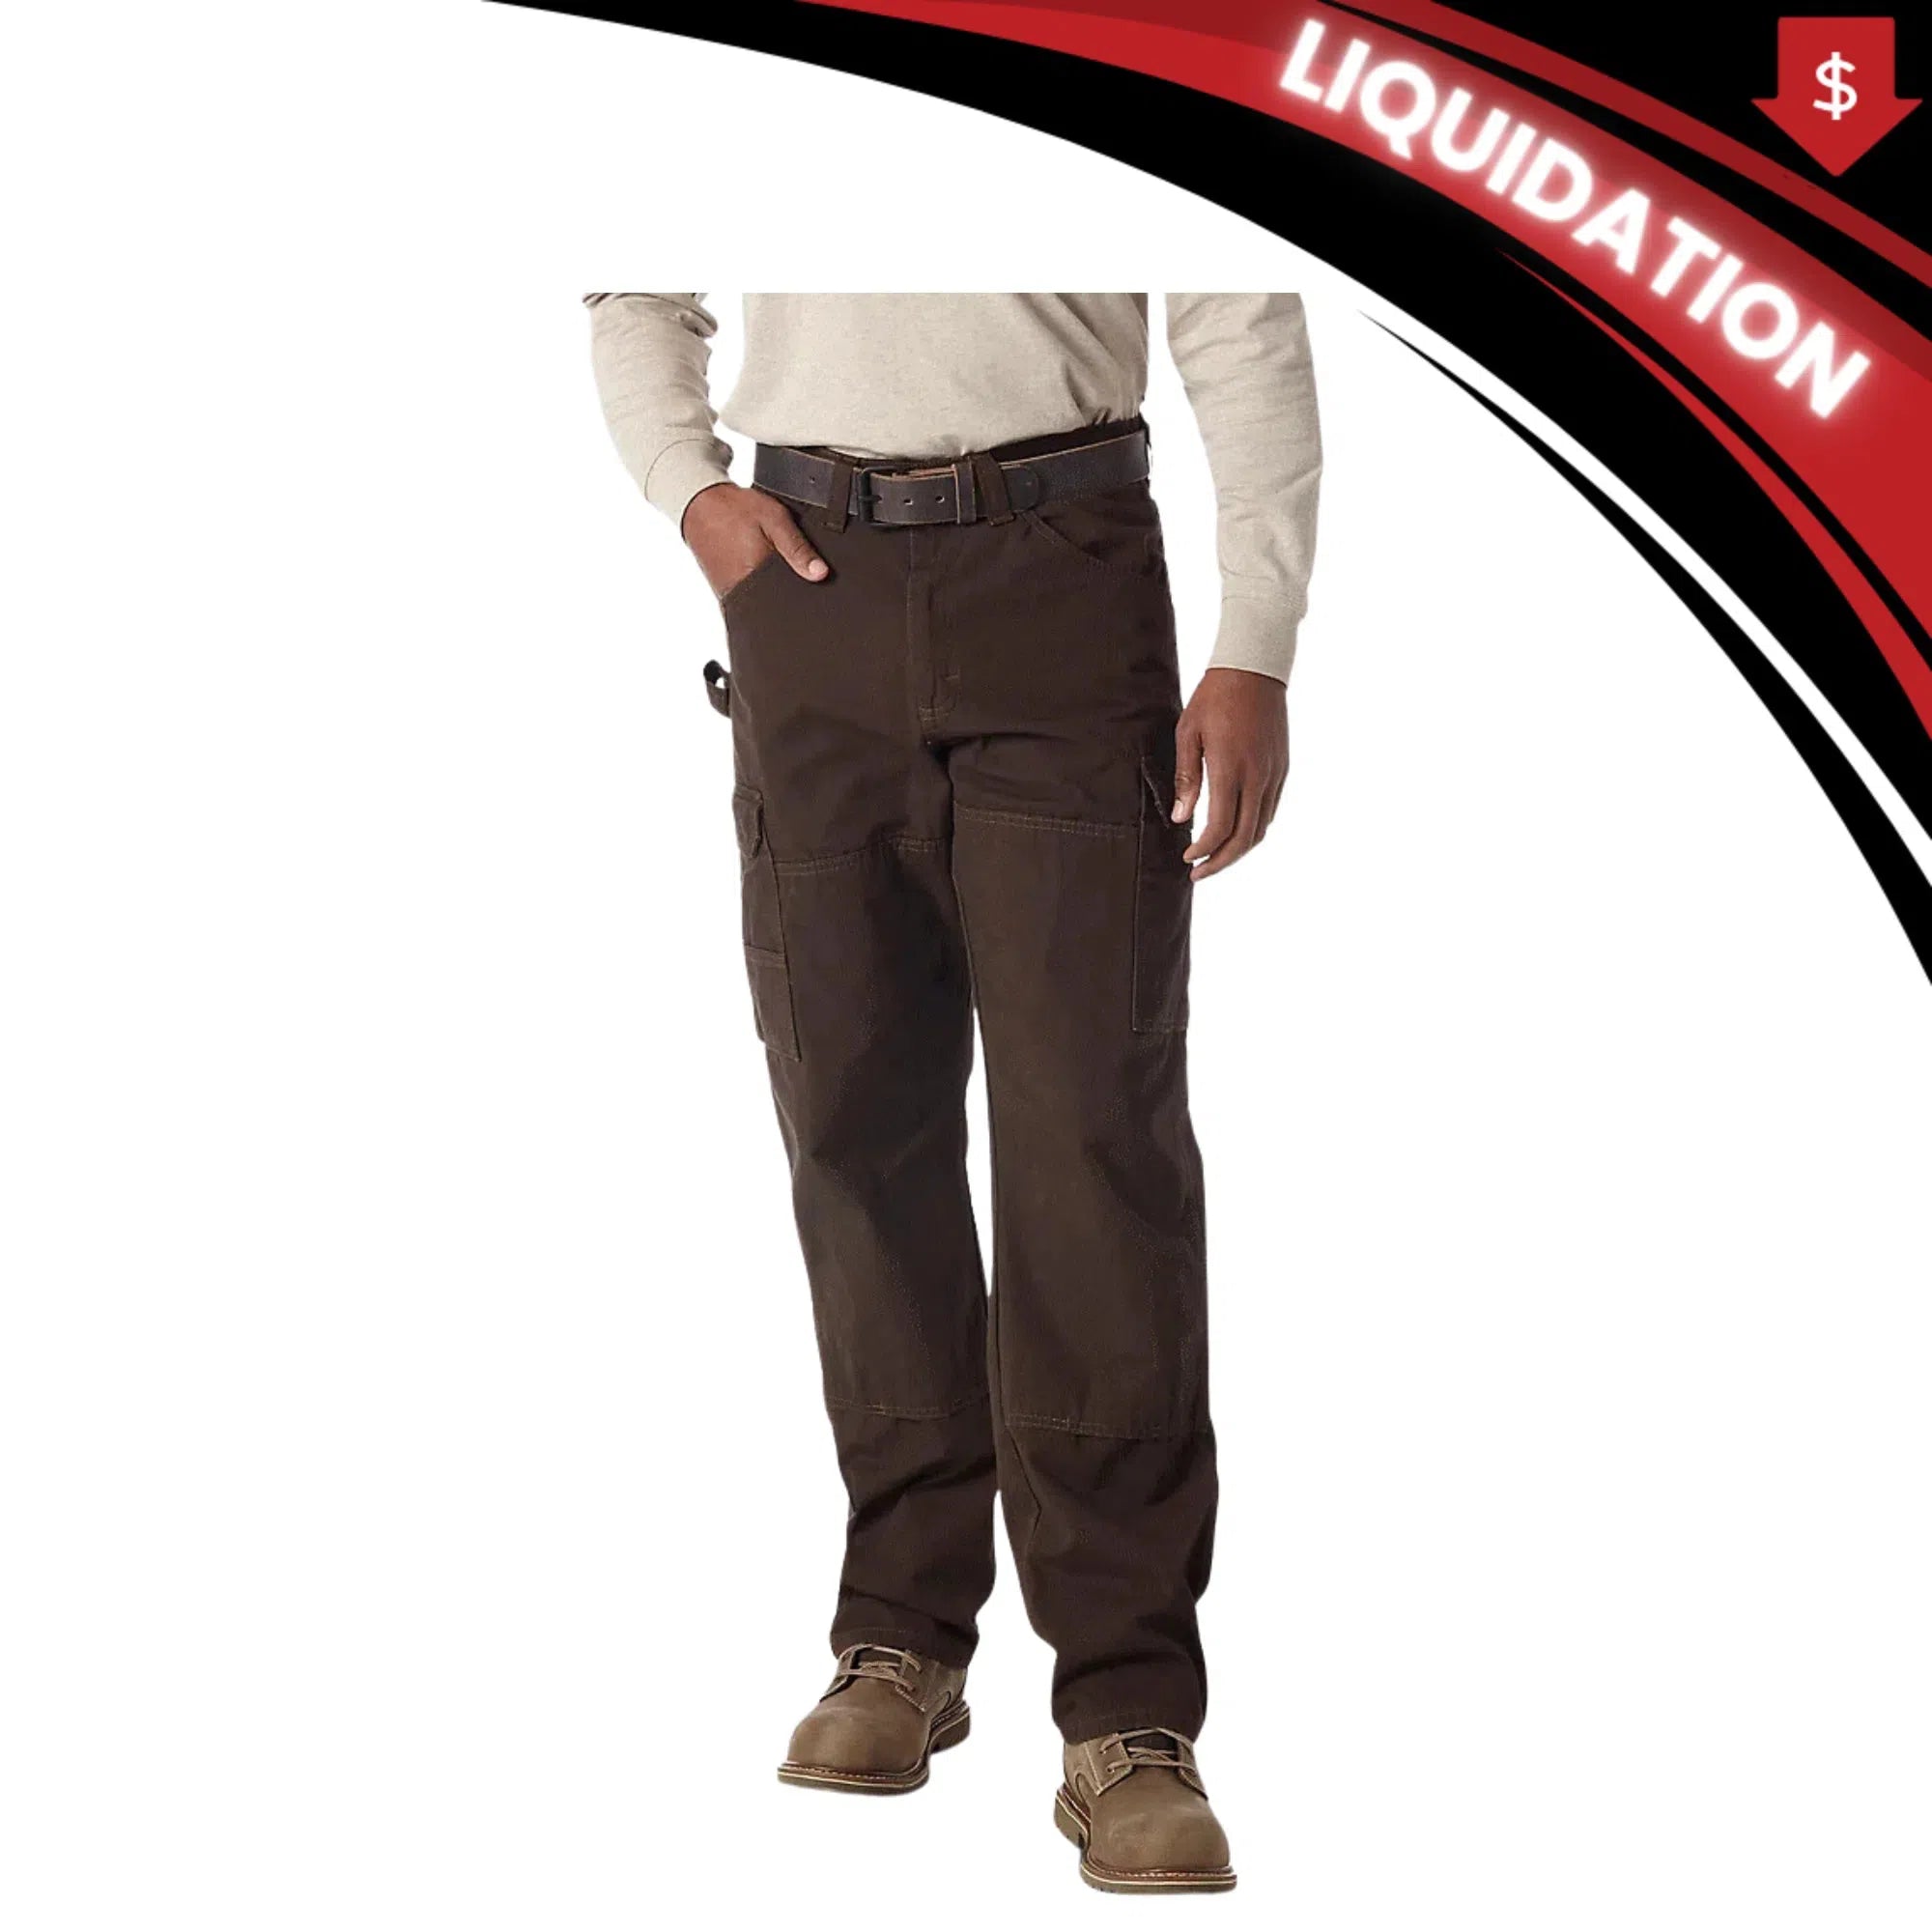 Wrangler Ripstop pants (Size 40)